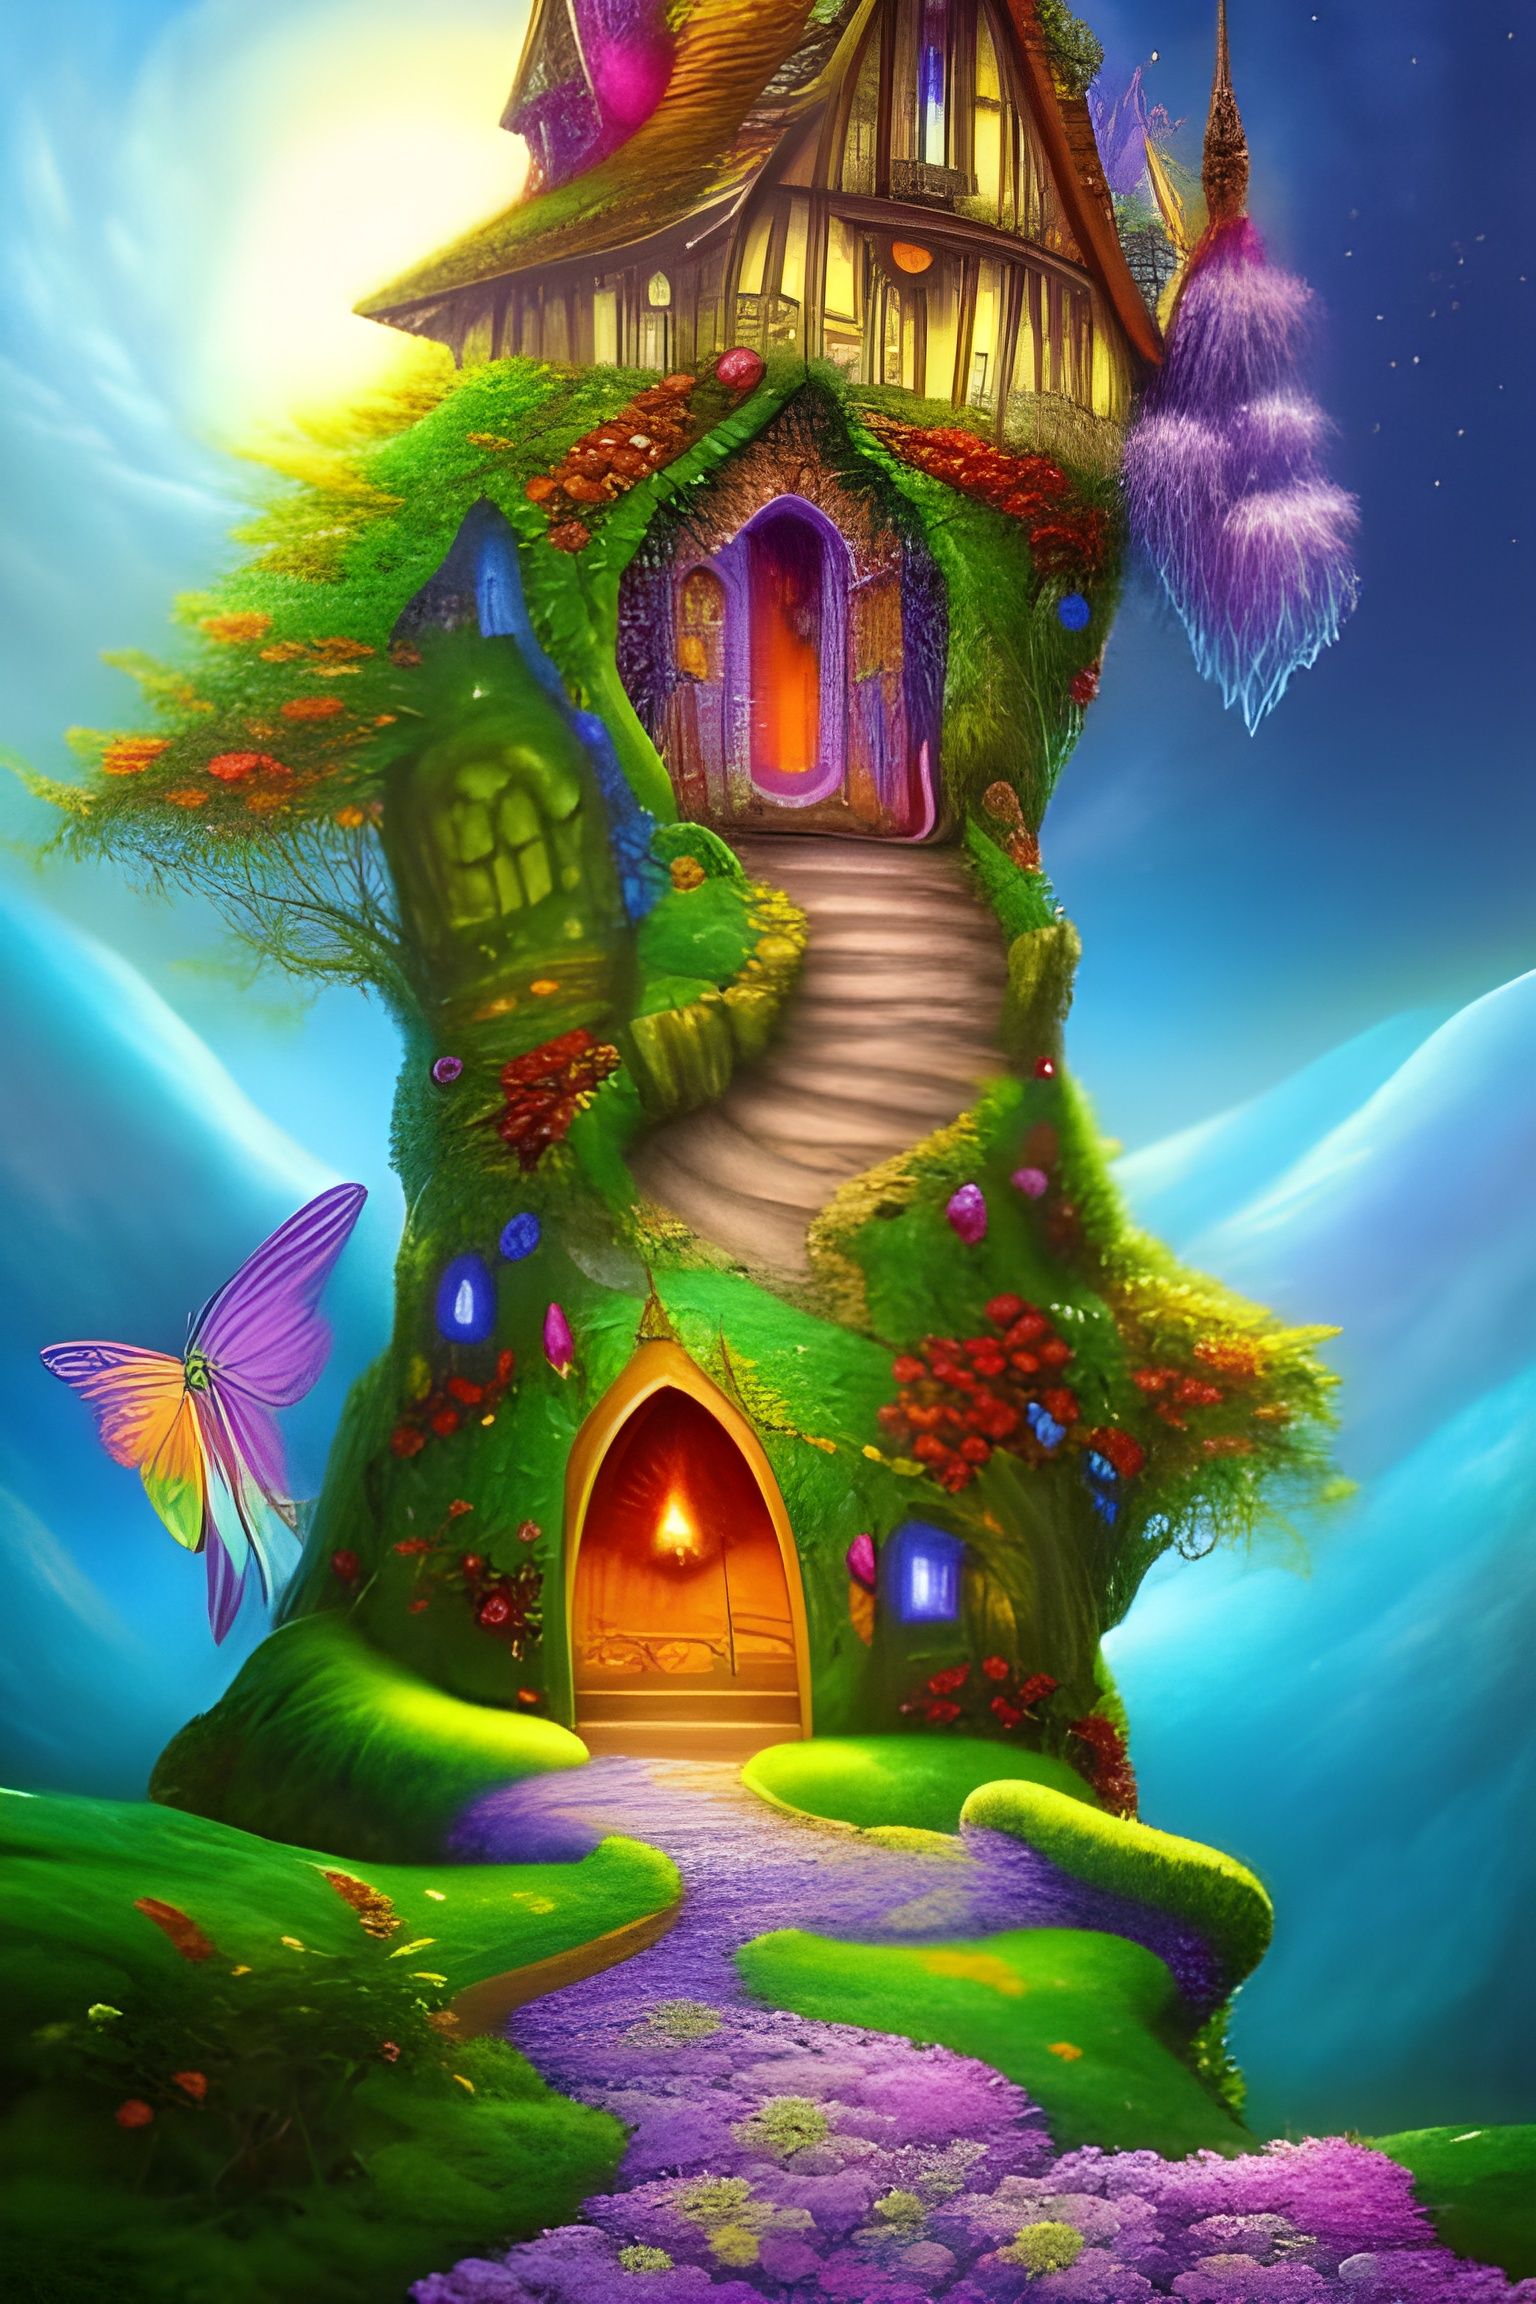 Magical Fairytale Wonderland - AI Generated Artwork - NightCafe Creator